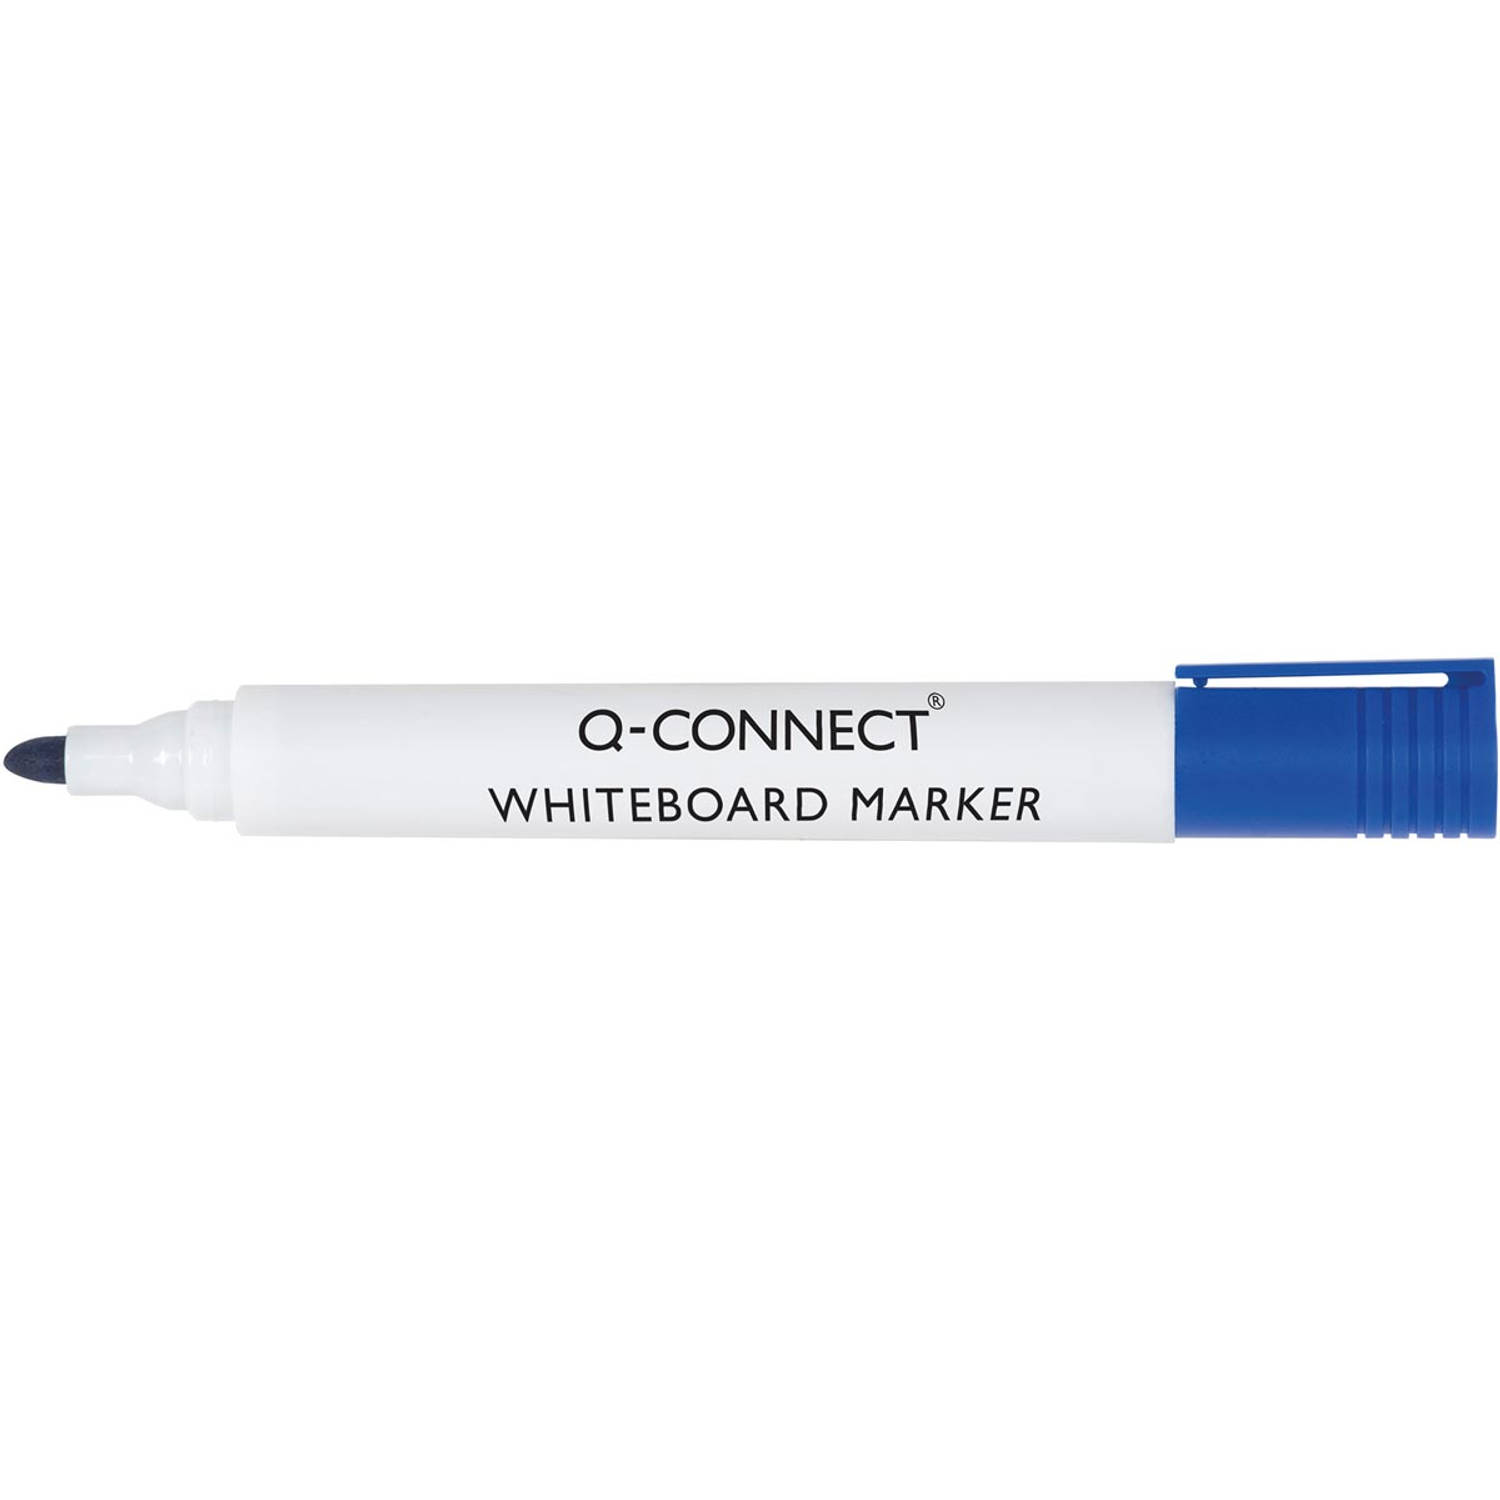 Q-CONNECT whiteboardmarker, 2-3 mm, ronde punt, blauw 10 stuks